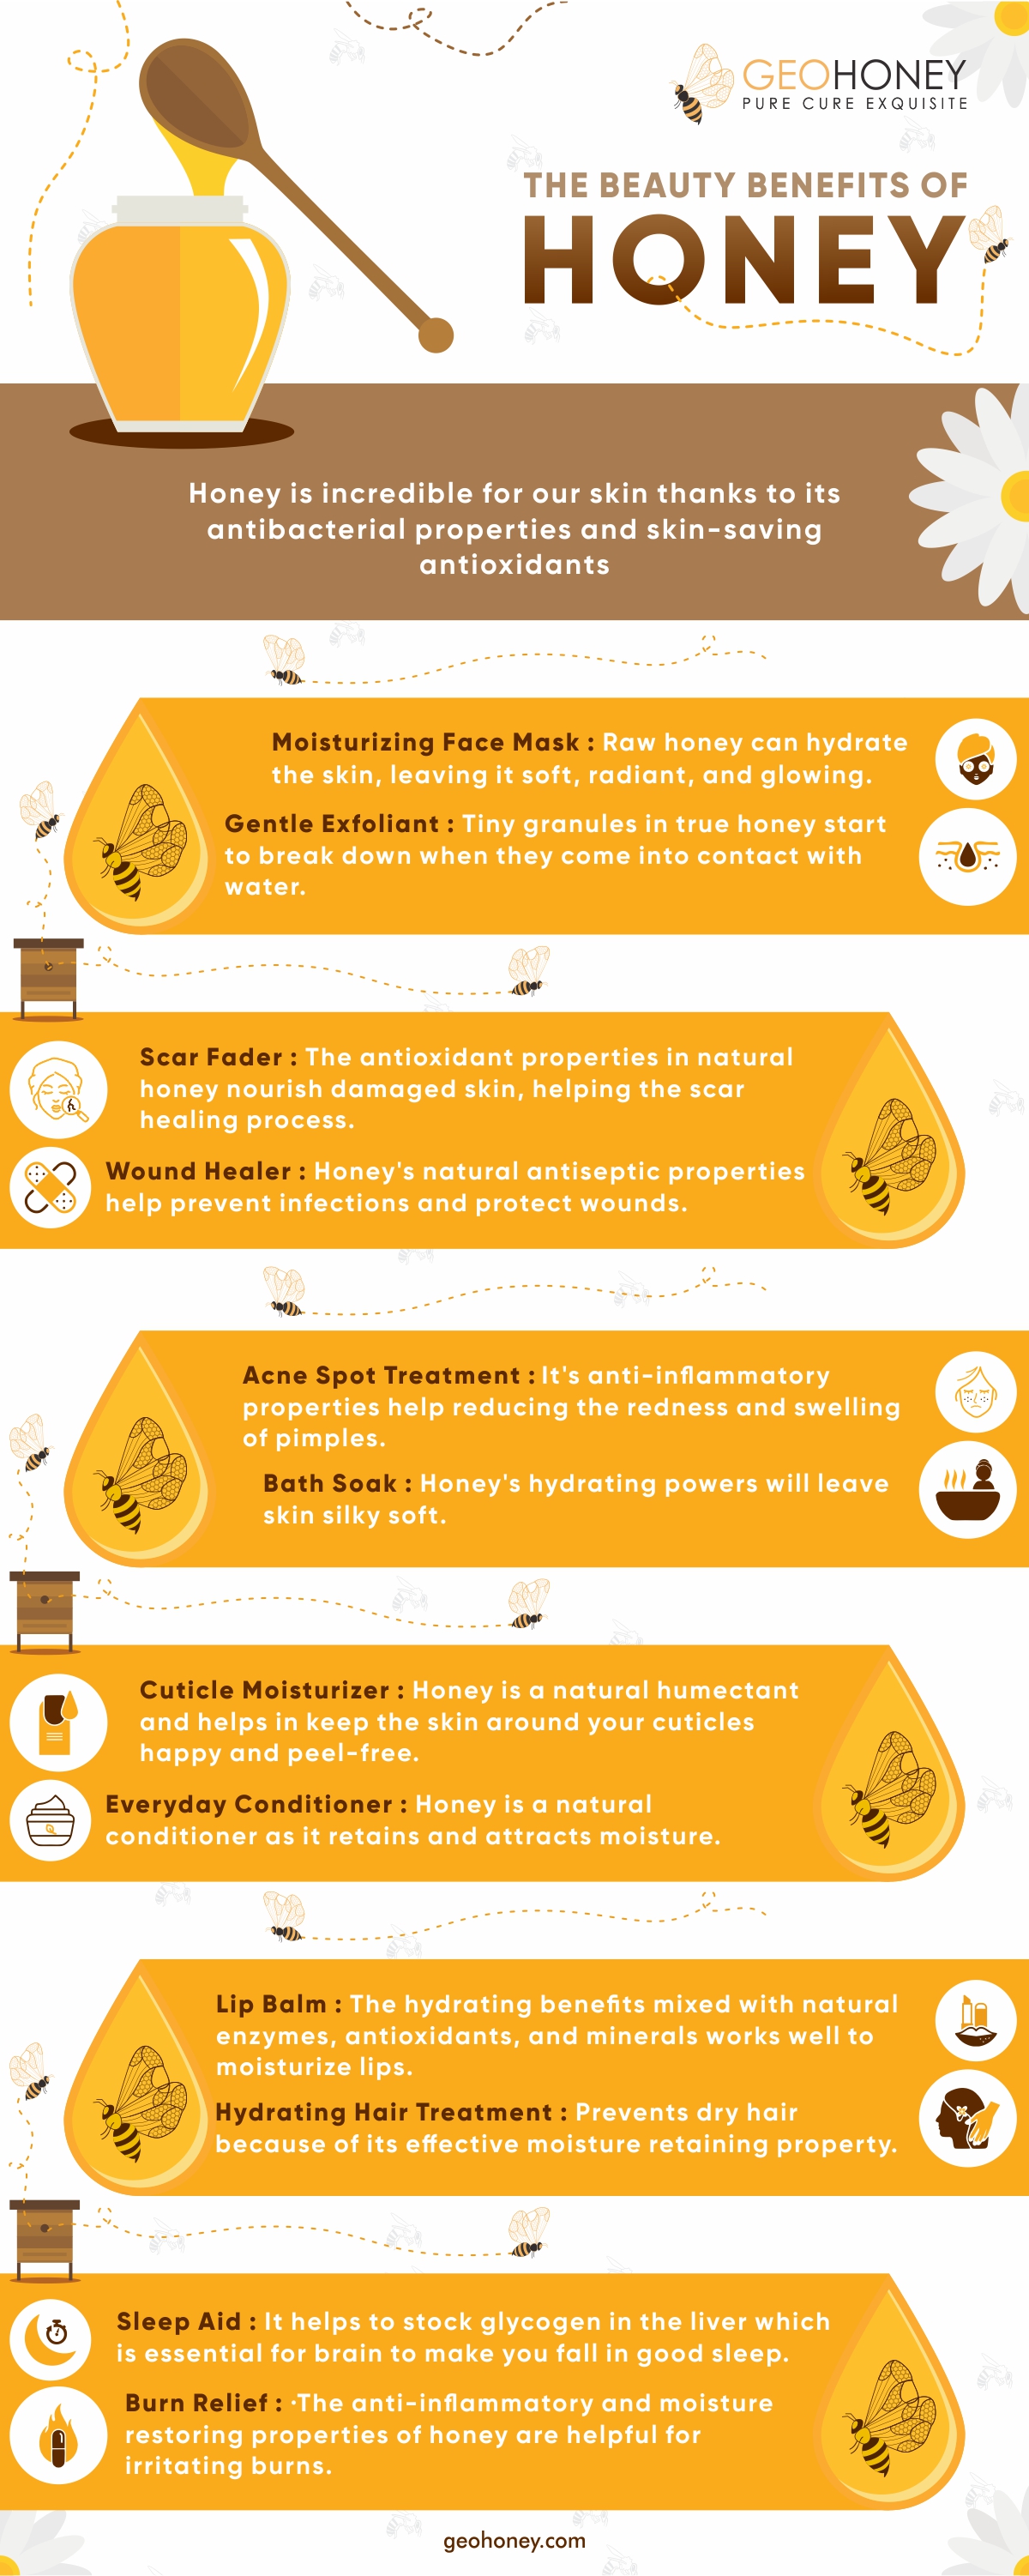 Beauty benefits of Honey - Geohoney